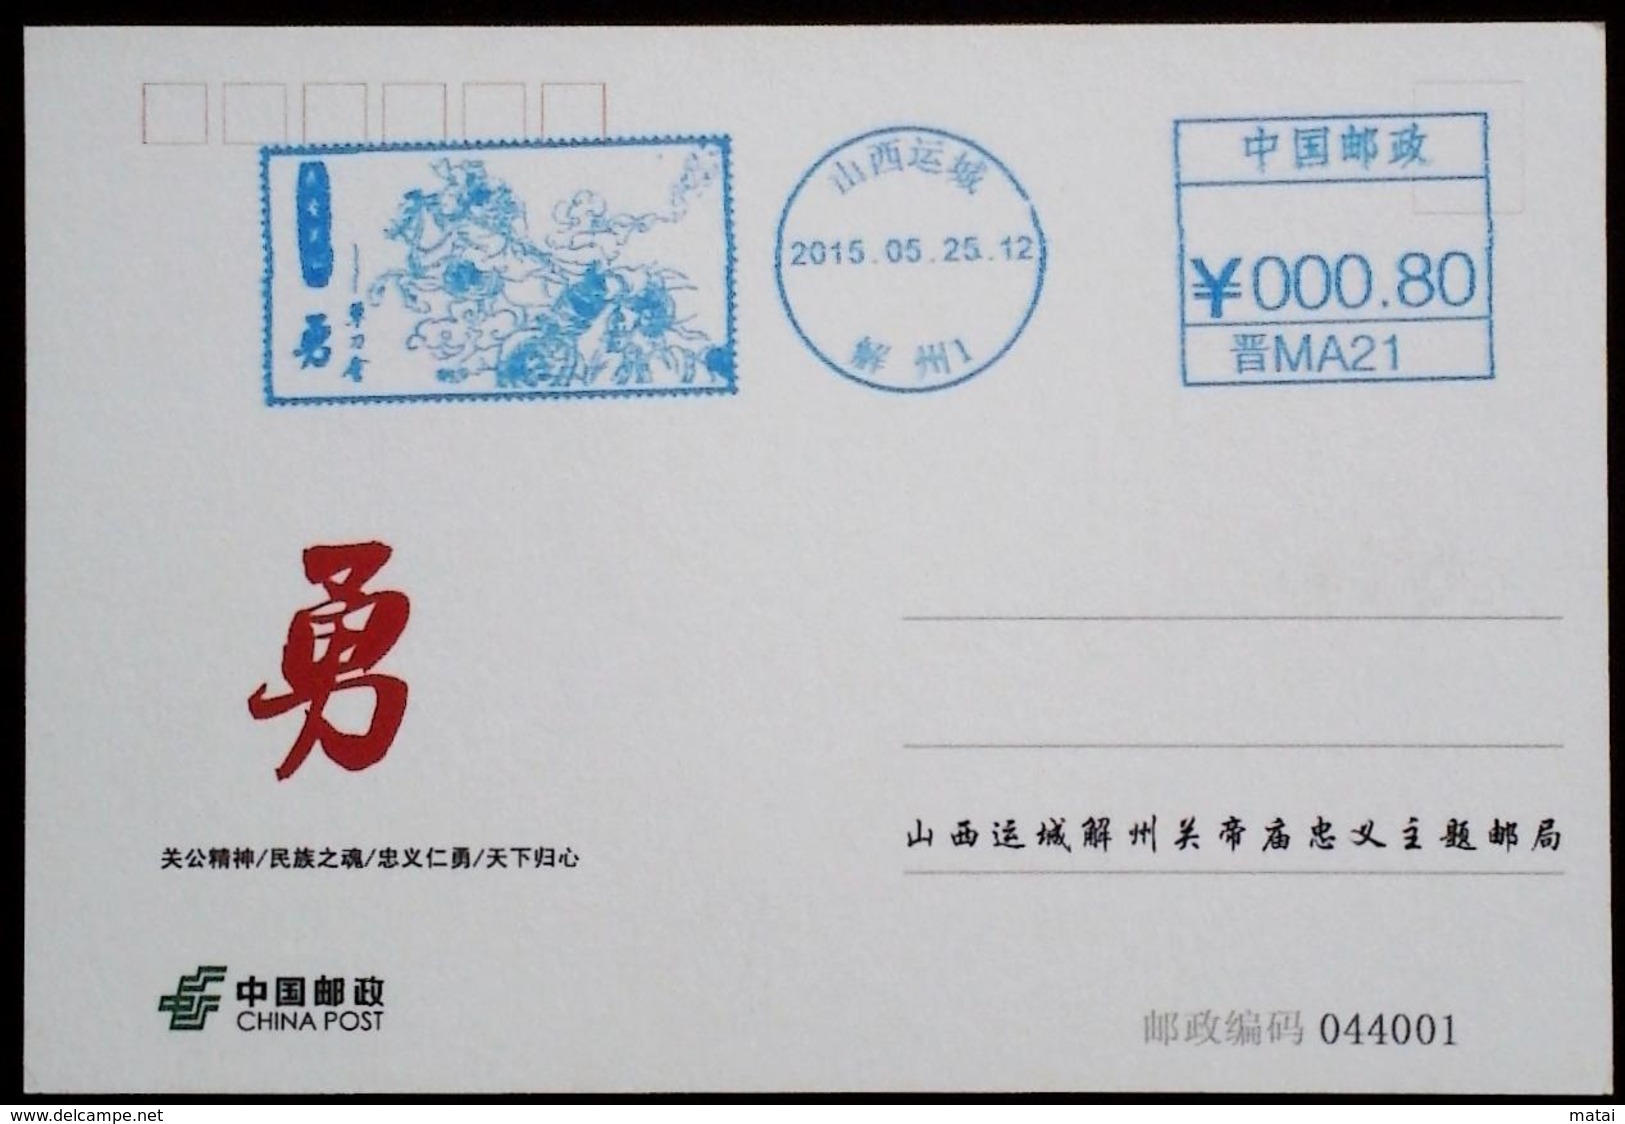 CHINA CHINE CINA  2015.5.25 SHANXI YUNCHENG 044001 关公庙邮局 GUAN GONG TEMPLE POST OFFICE METER STAMP 0.80YUAN - Oblitérés